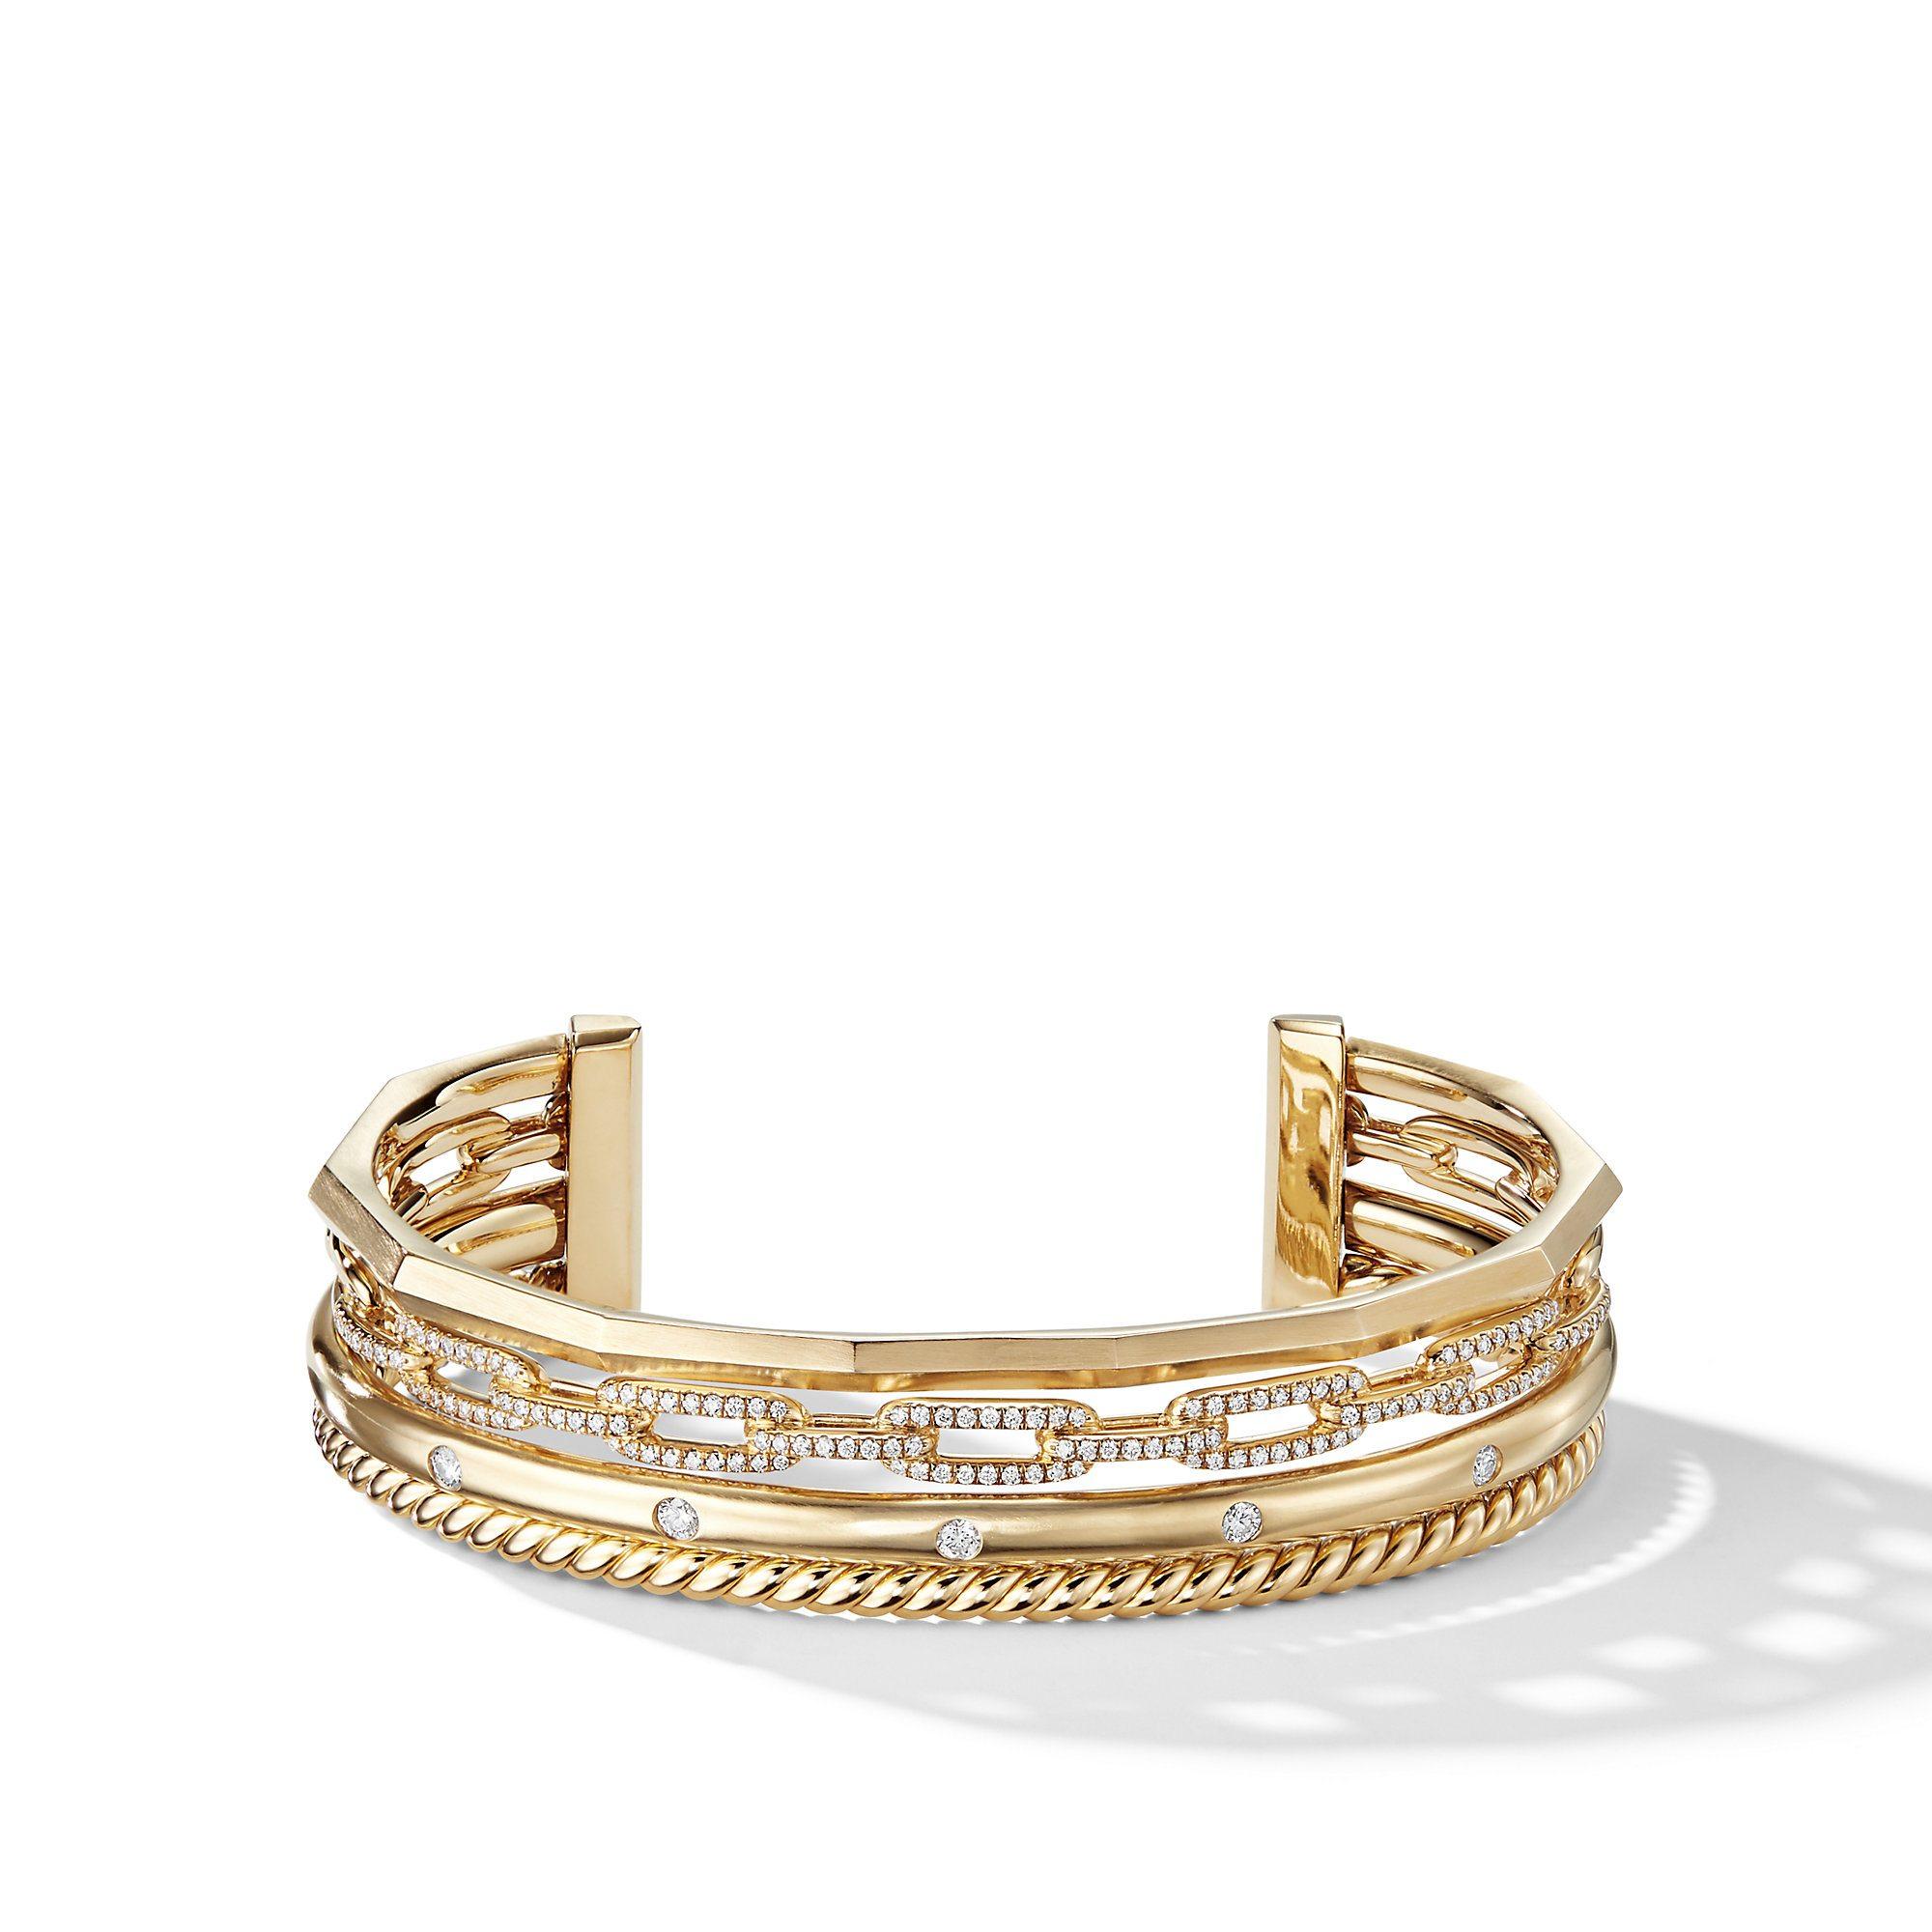 David Yurman Stax medium Cuff Bracelet with Diamonds in 18k Gold, 14mm